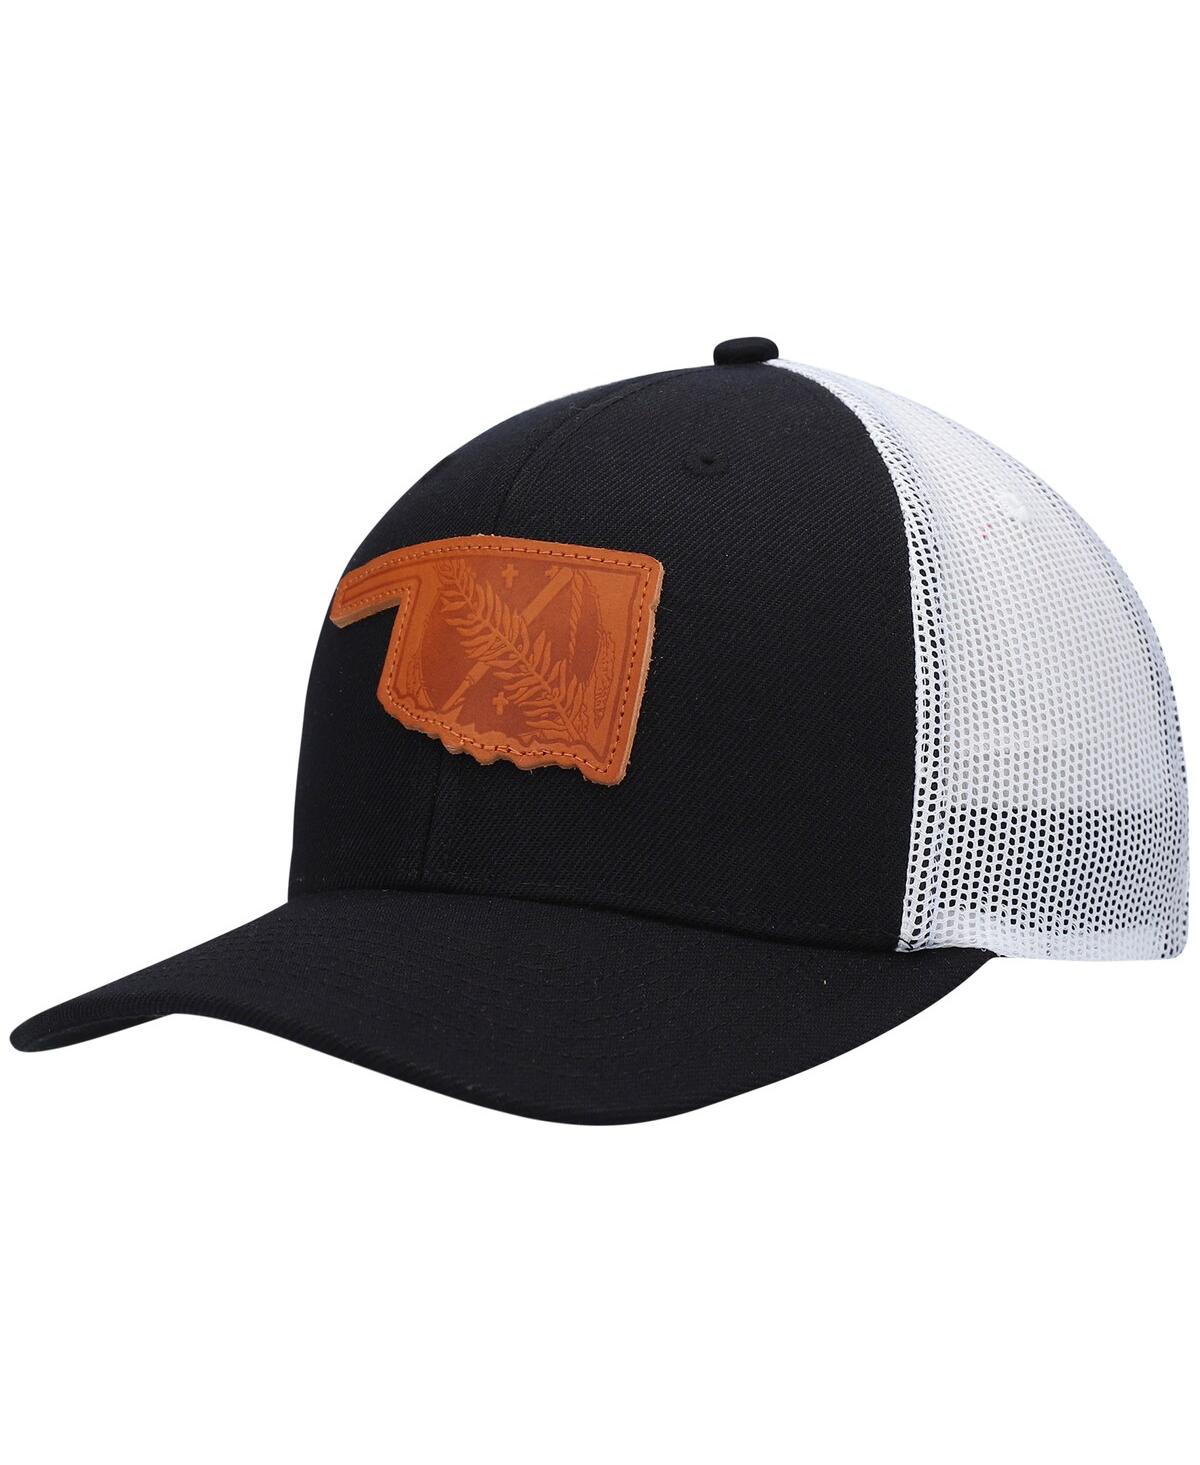 Men's Local Crowns Black Oklahoma Leather State Applique Trucker Snapback Hat - Black